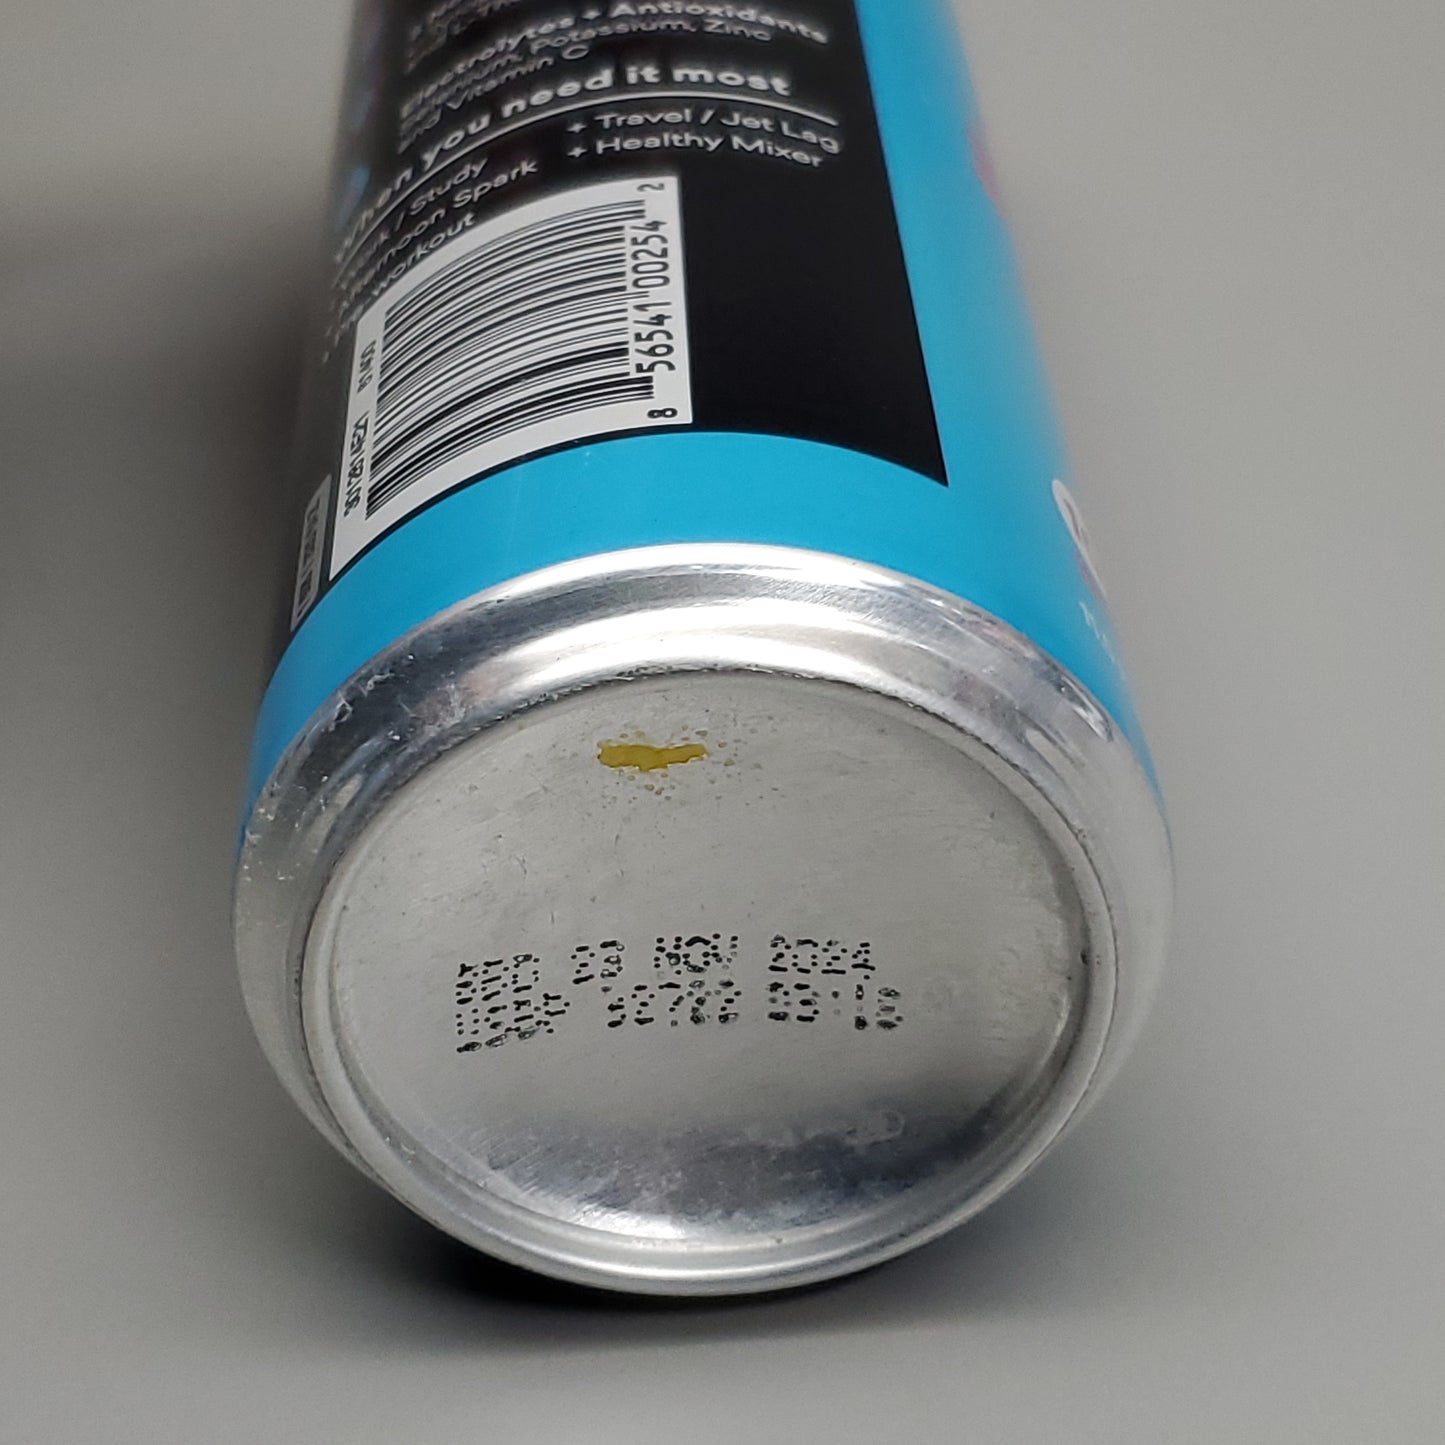 EBOOST 12PK! Super Fuel Energy Drinks Sparkling Blue Raspberry 11.5 fl oz (11/24)